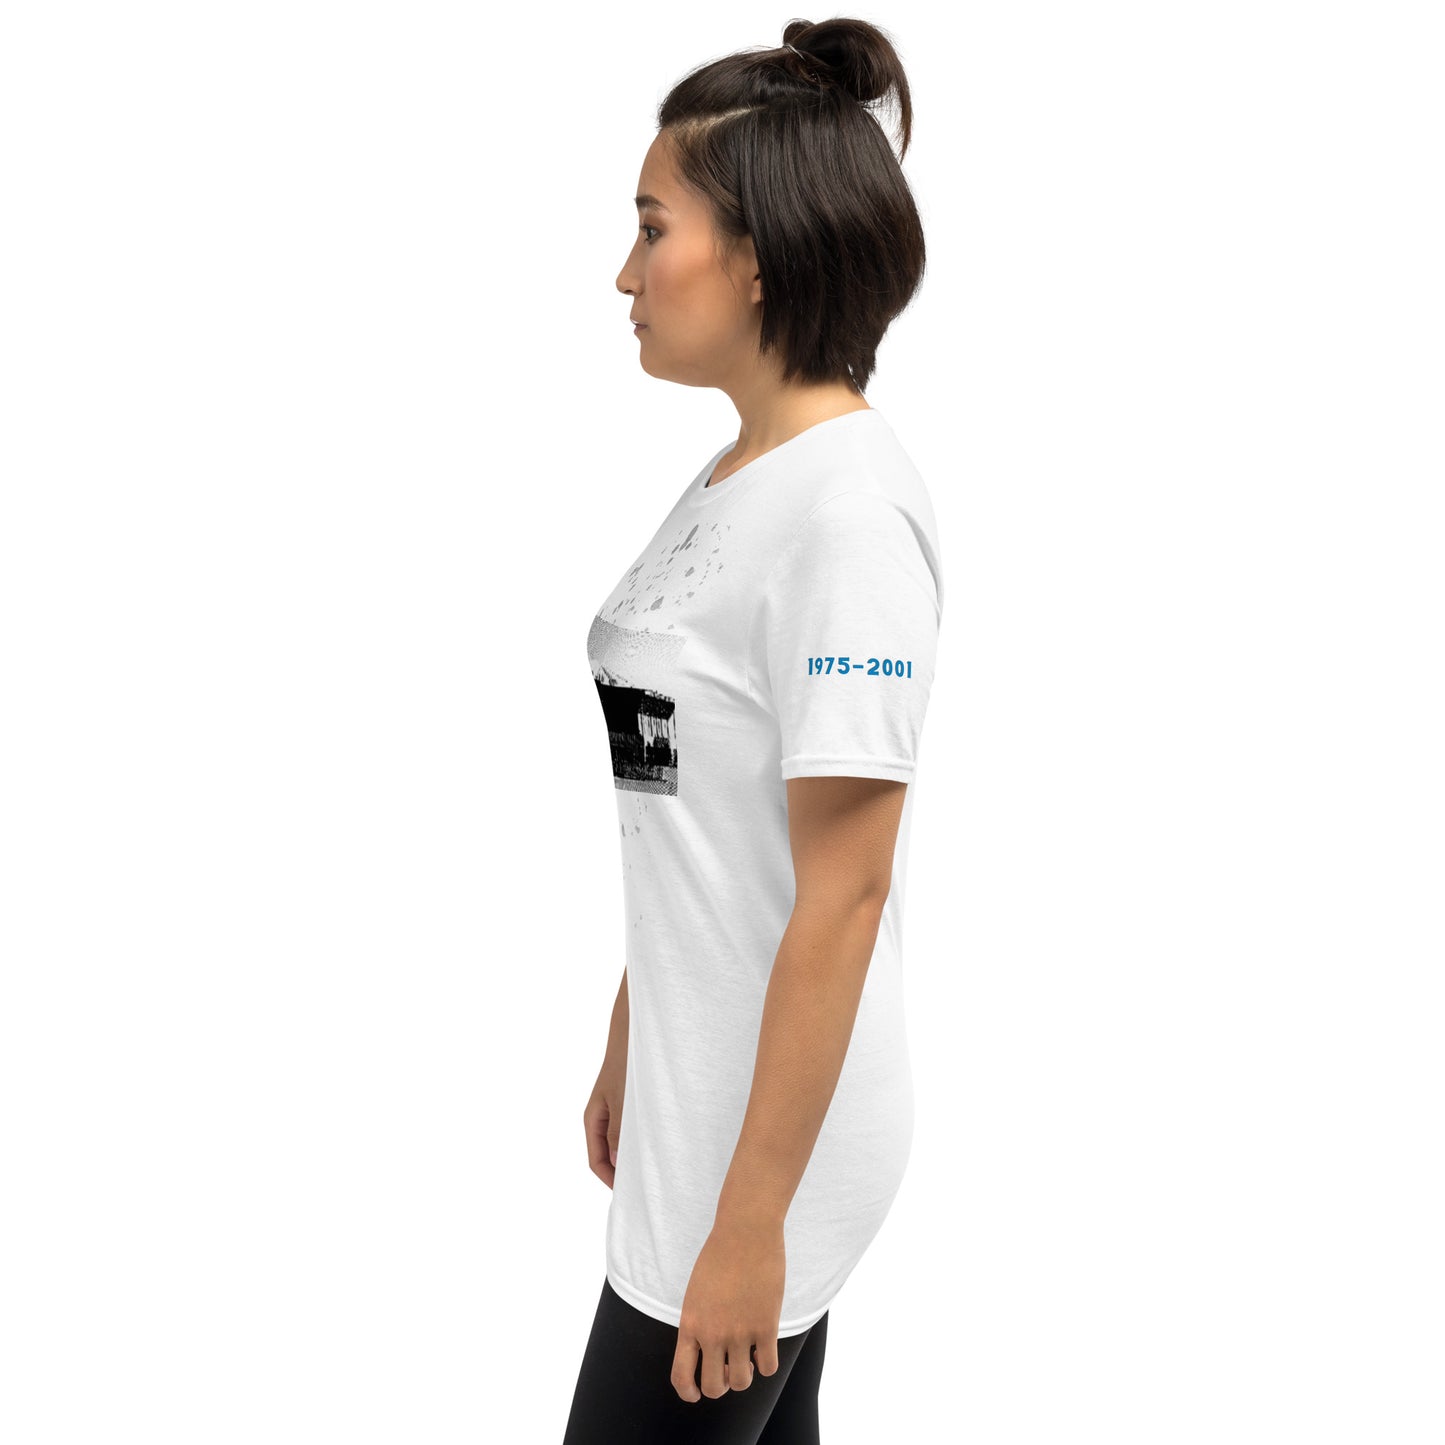 Silverdome Short-Sleeve Unisex T-Shirt